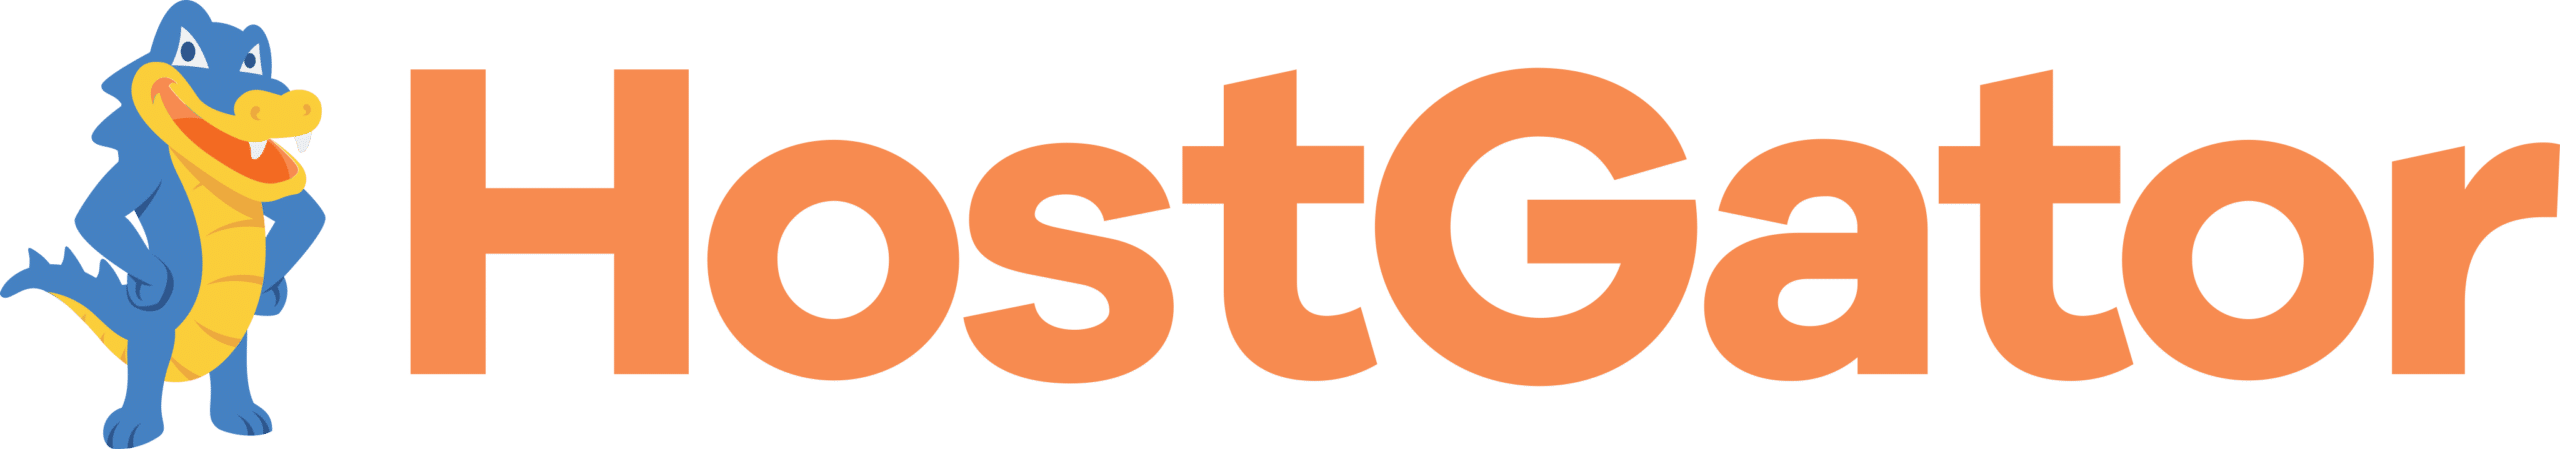 Hostgator logo digital marketing company in india